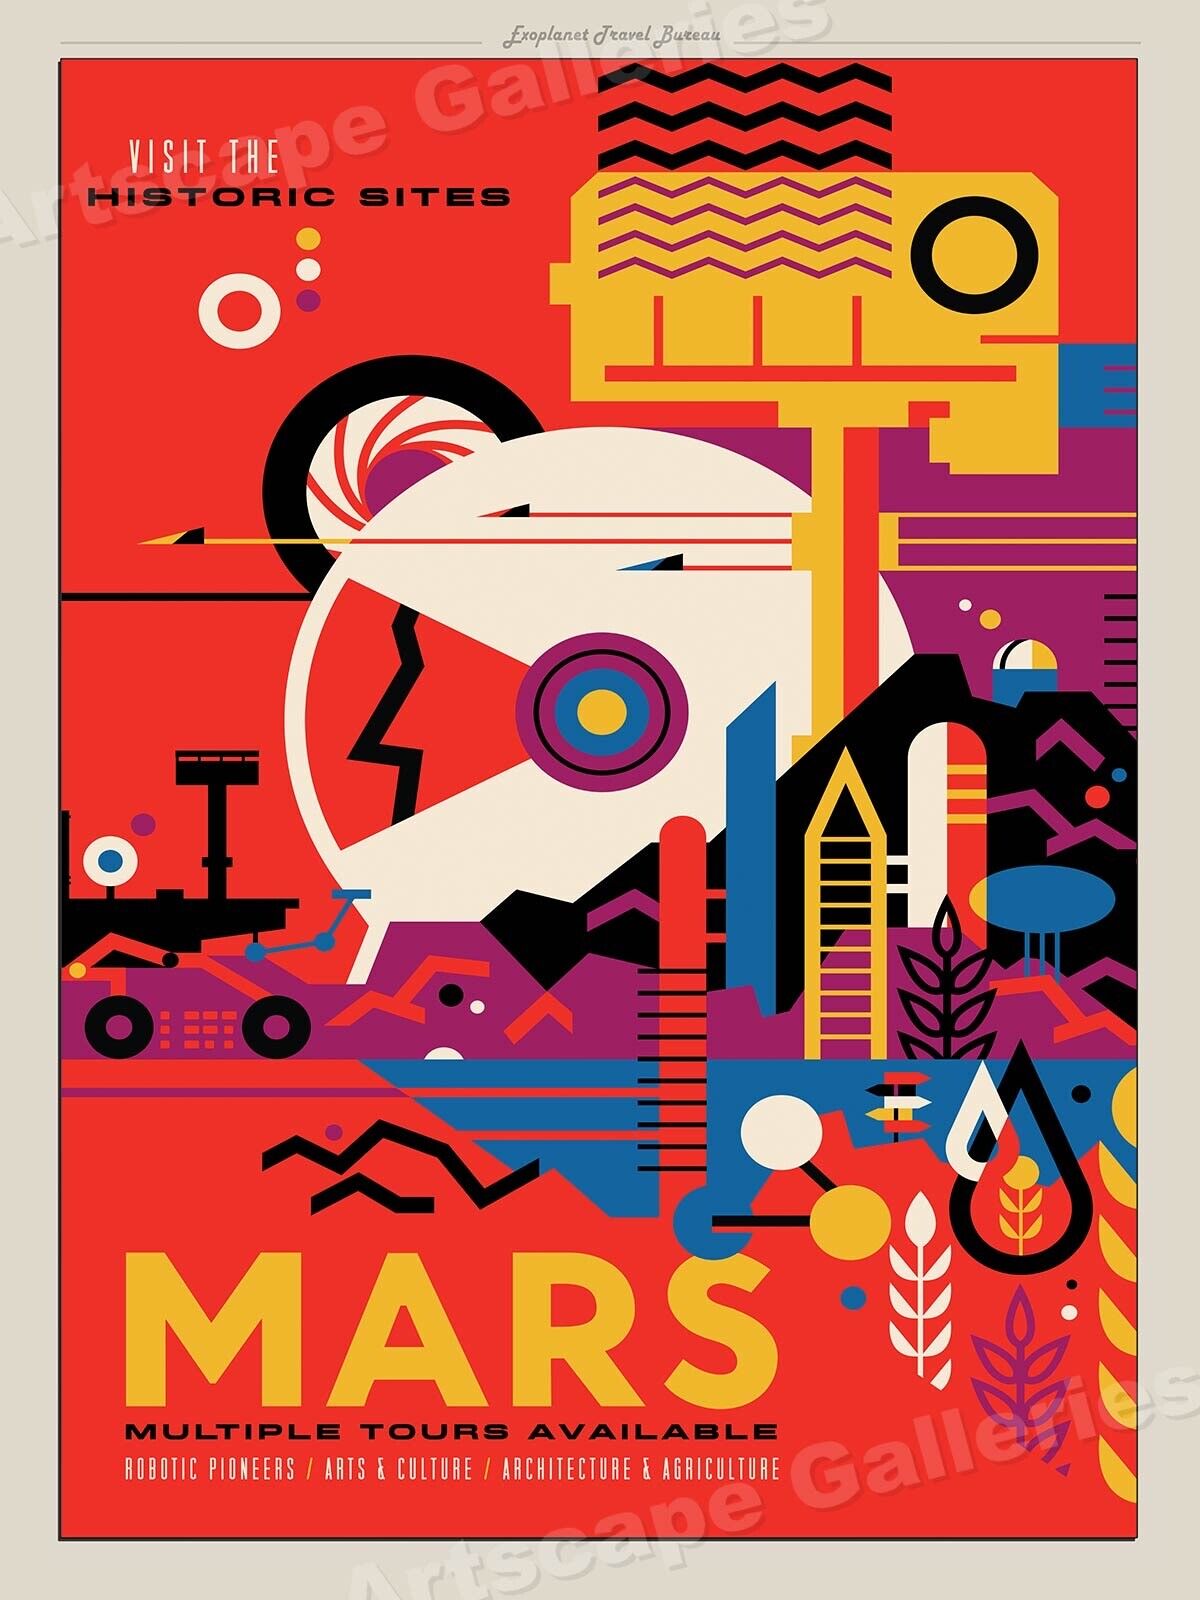 “Tour Mars” Space Exploration Retro NASA Space Travel Poster - 24x32